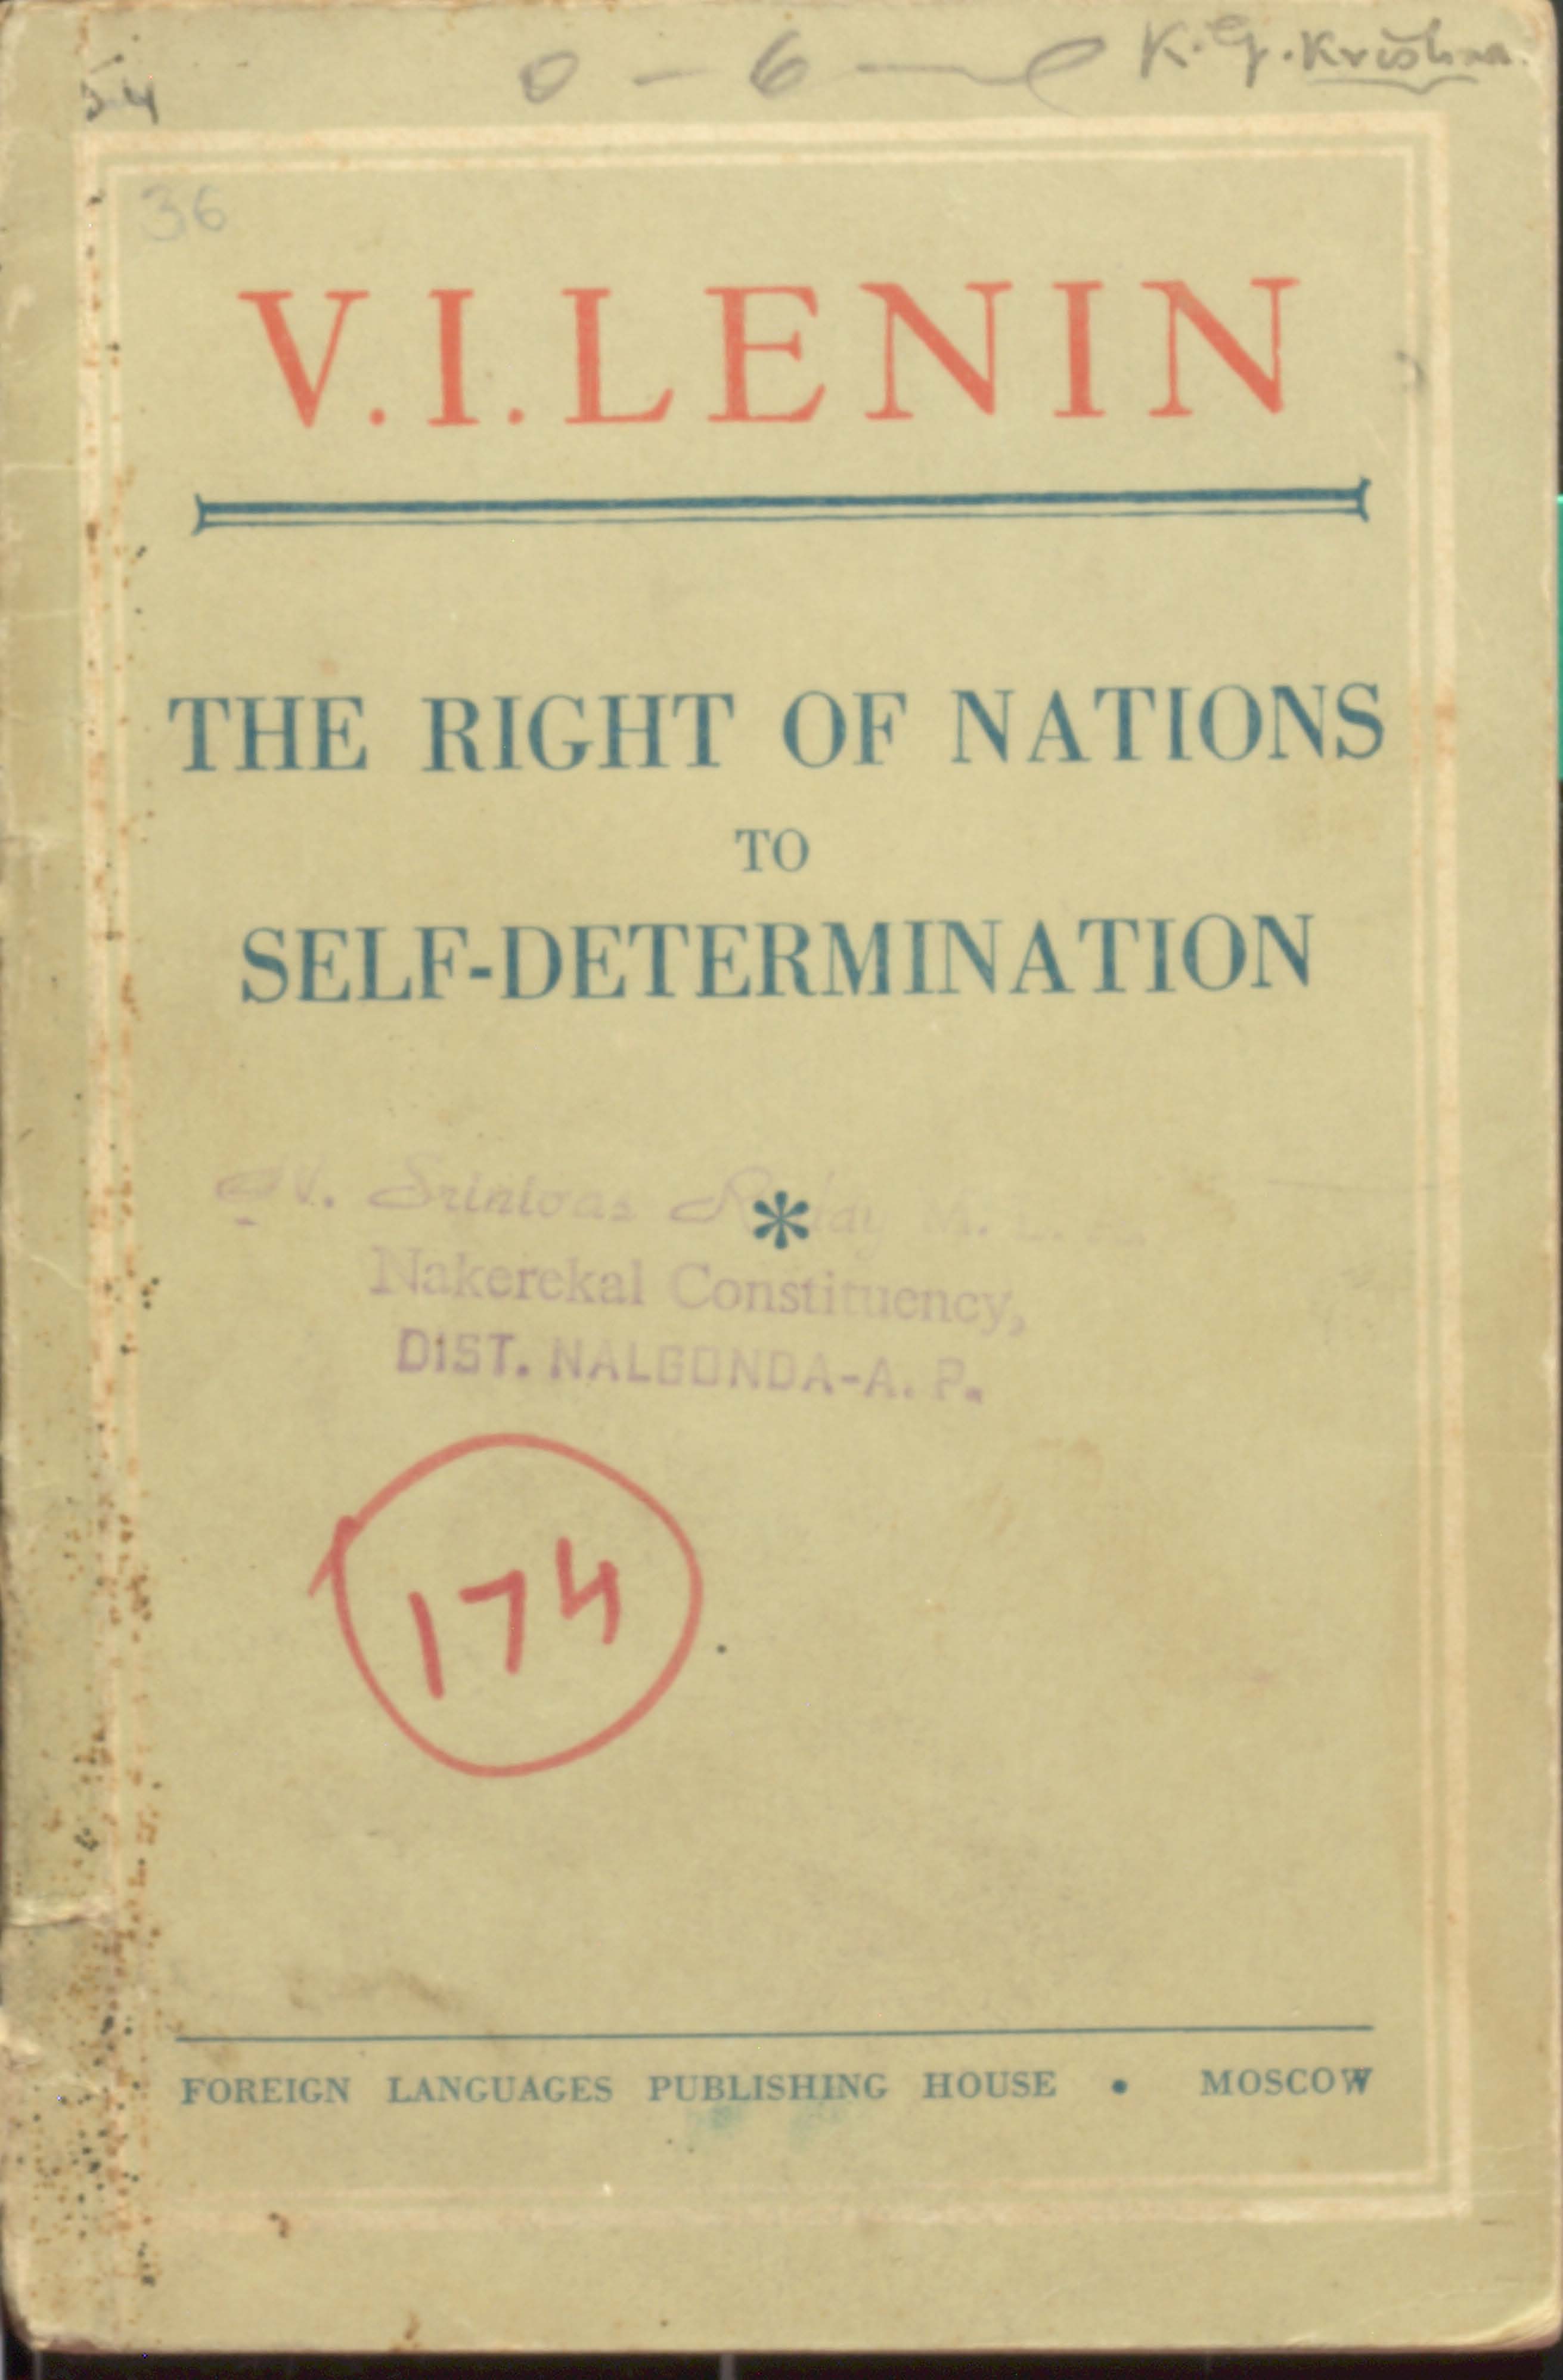 V.L.Lenin the right of nations self-determination